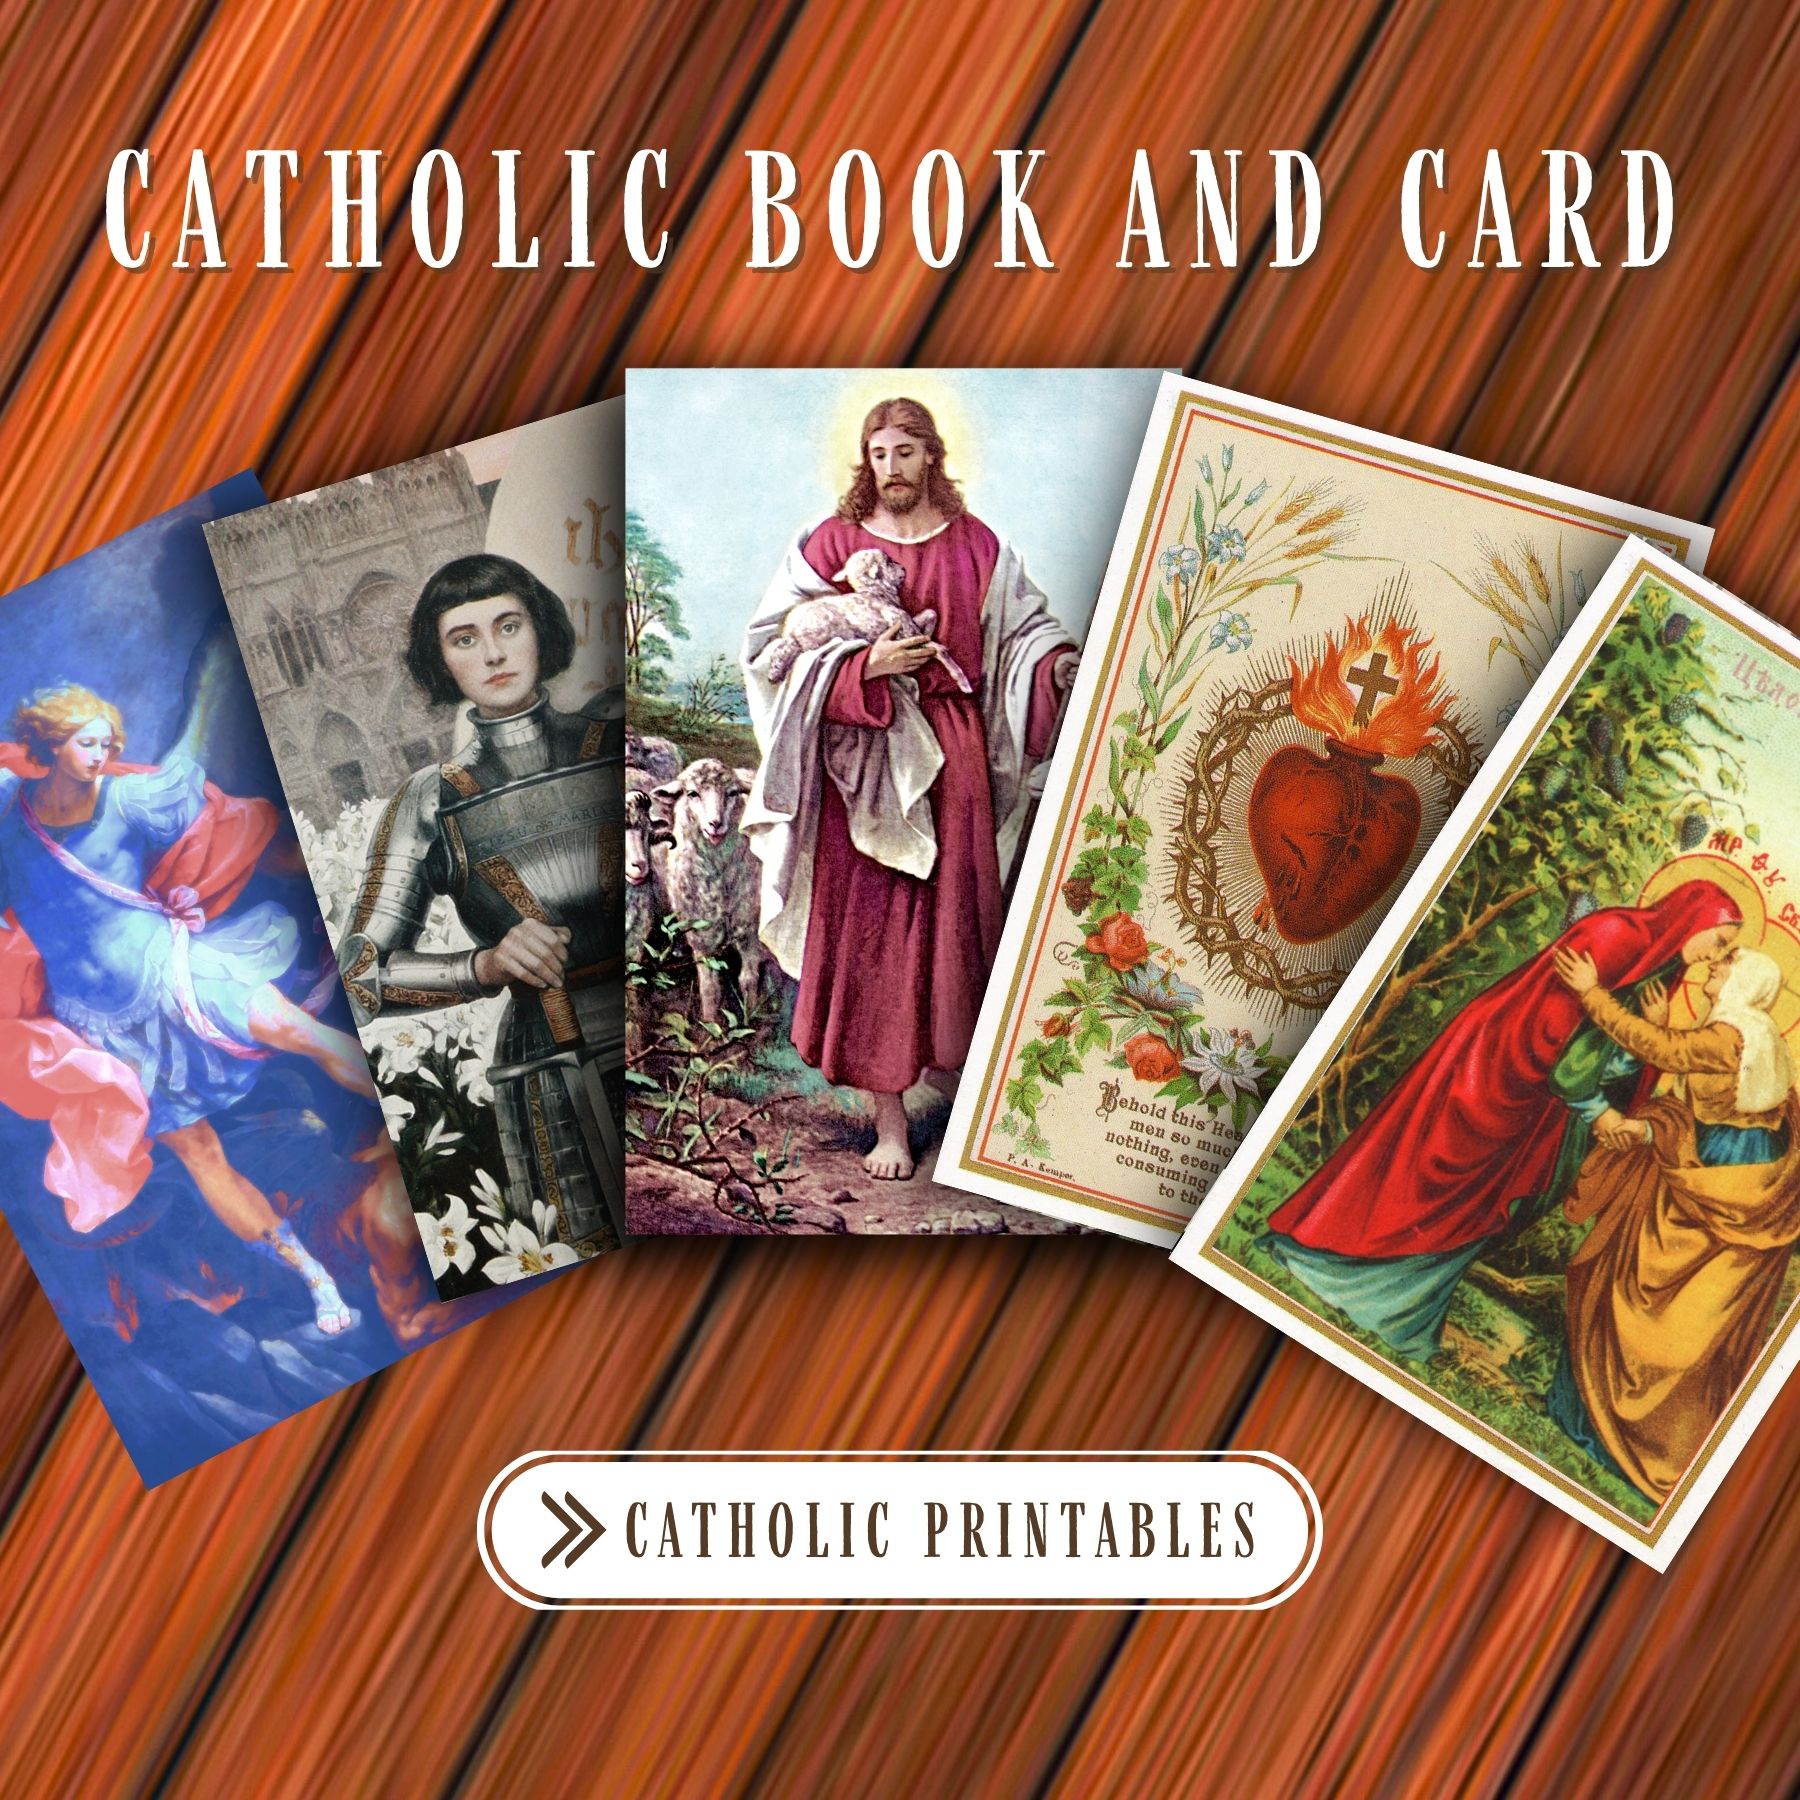 Catholic Printables Image - clickable